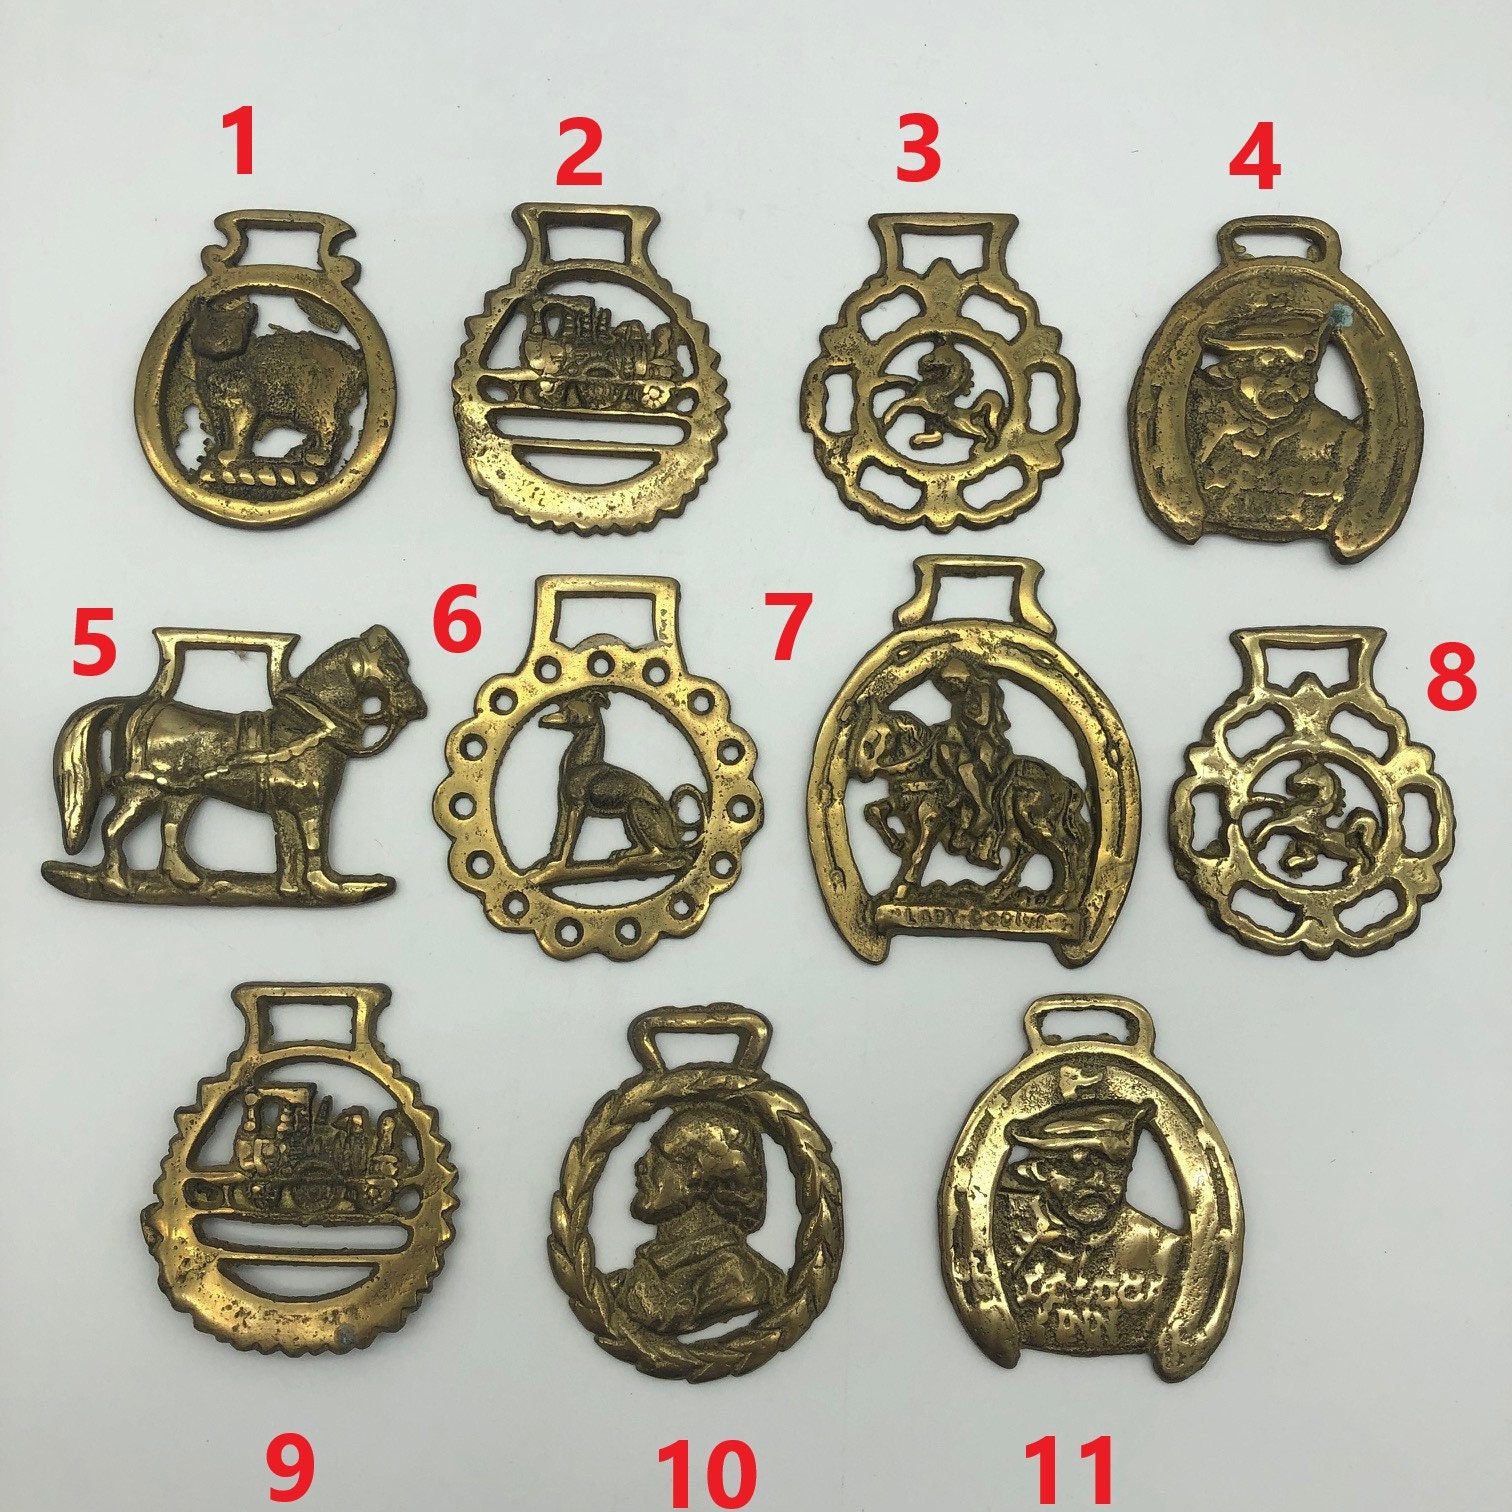 Vintage Brass Horse Bridle Medallion -  Canada